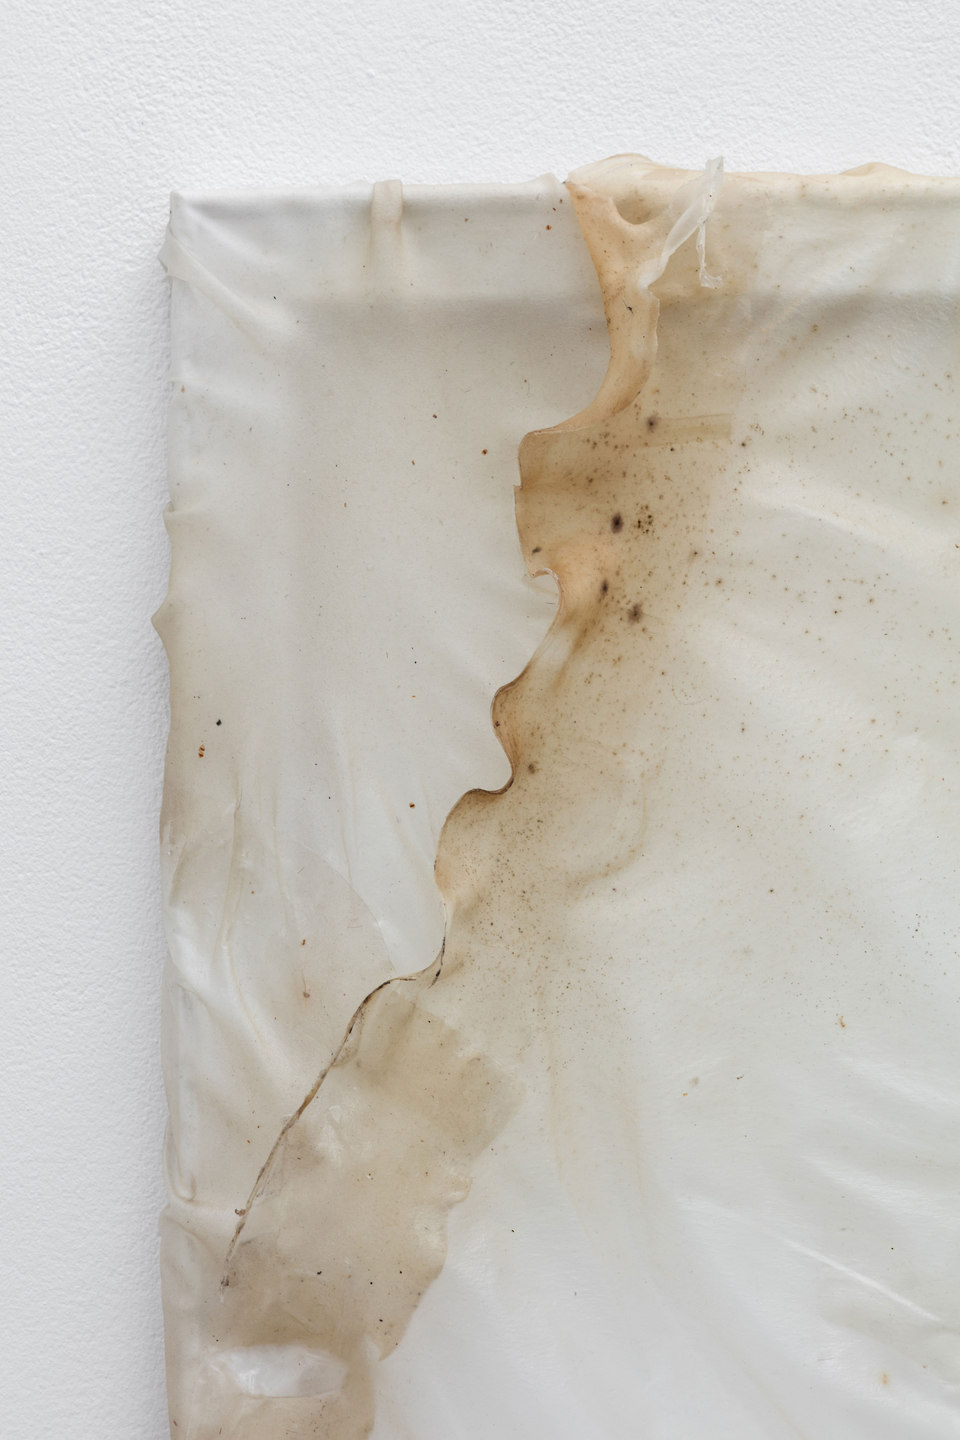 Aude Pariset, GREENHOUSES, 'Ménage Garbage Patch 2' [detail], Bioplastic, mold, wood, paint, 55 x 110cm, 2016, Cell Project Space